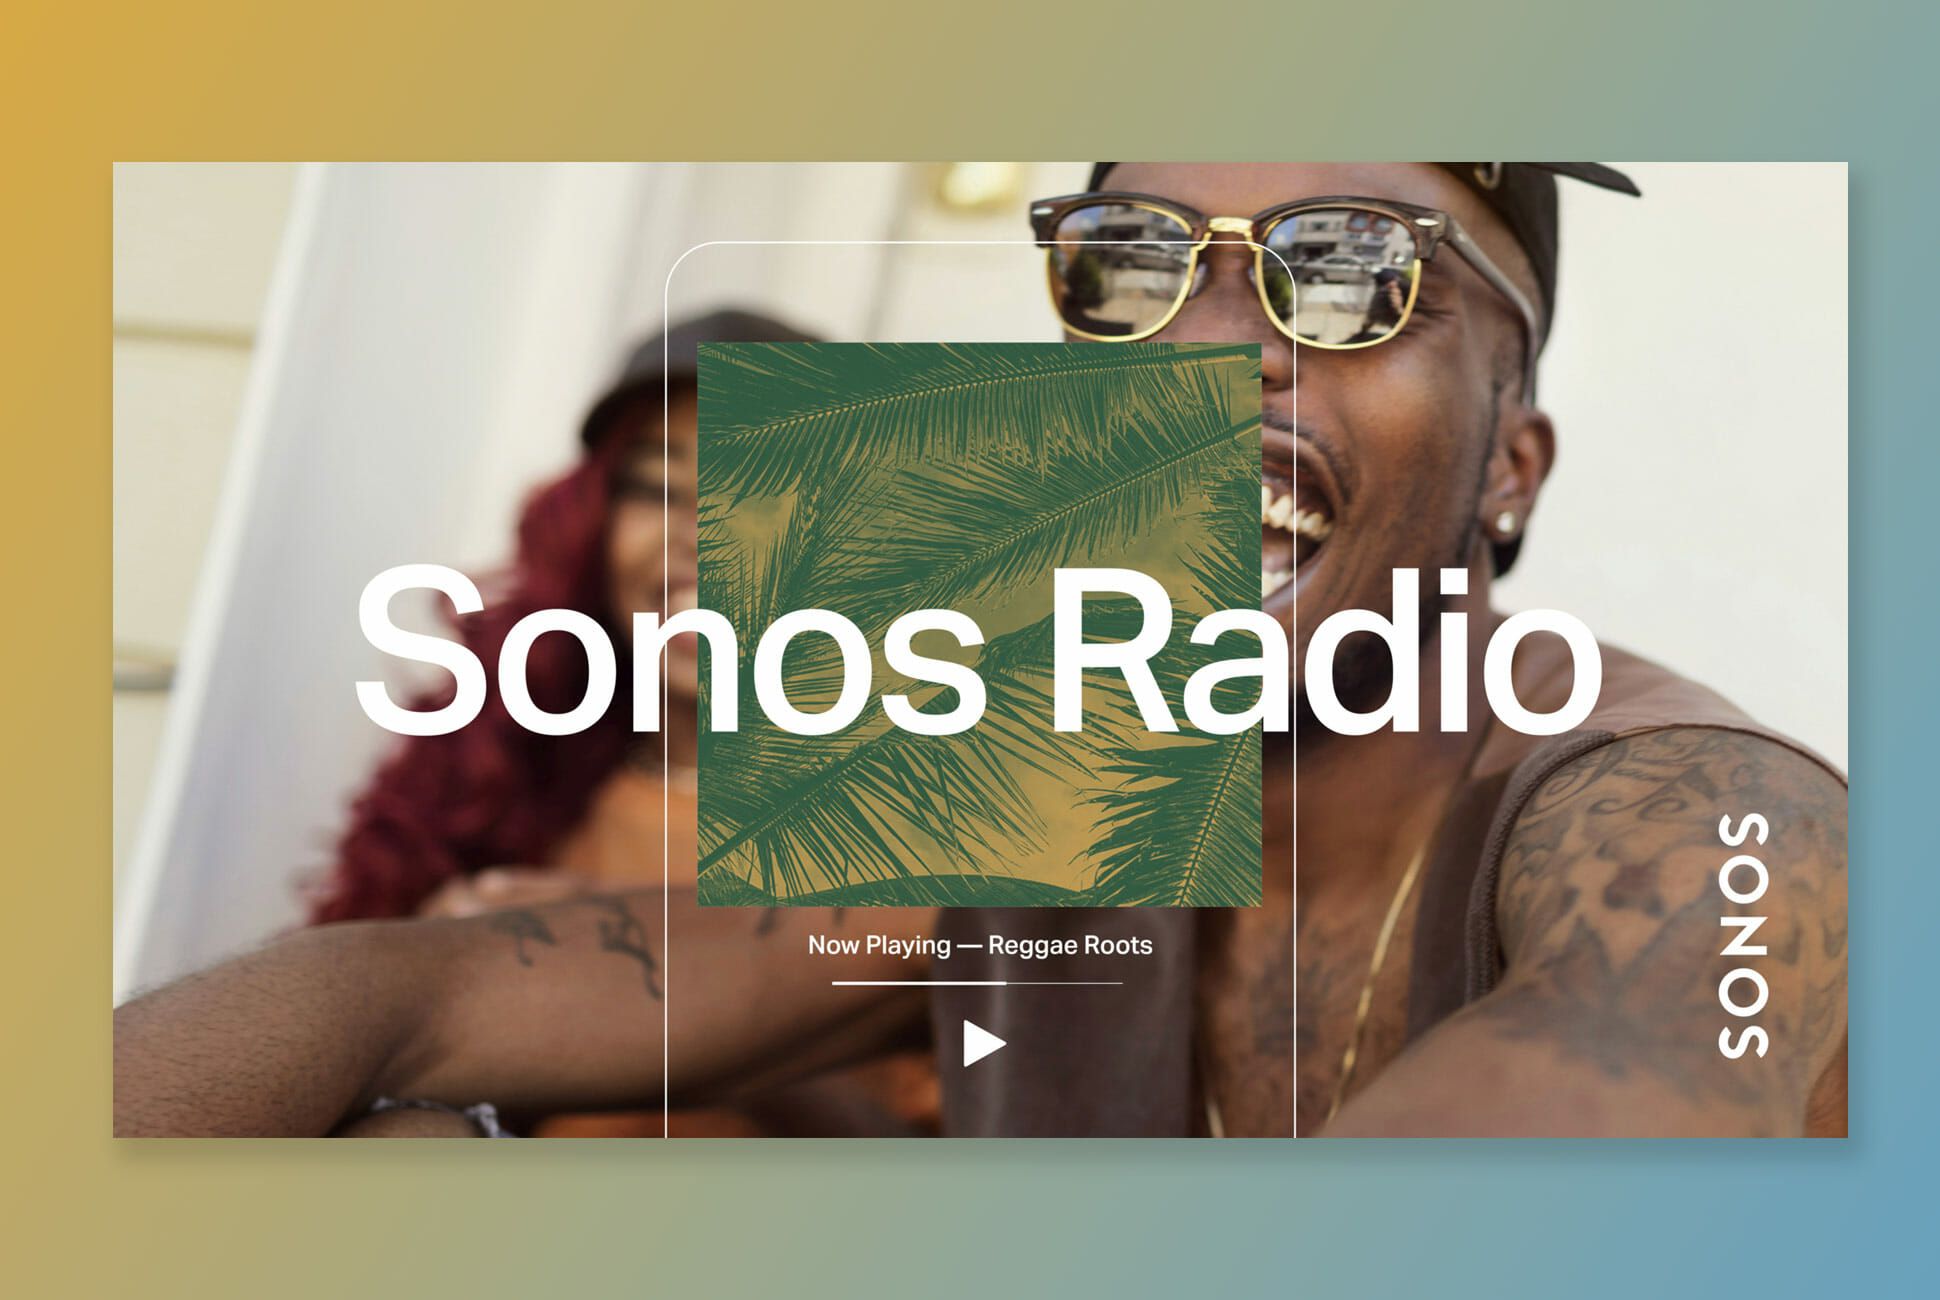 colchón pobreza Excretar 6 Questions About Sonos's New Radio Streaming Service, Answered